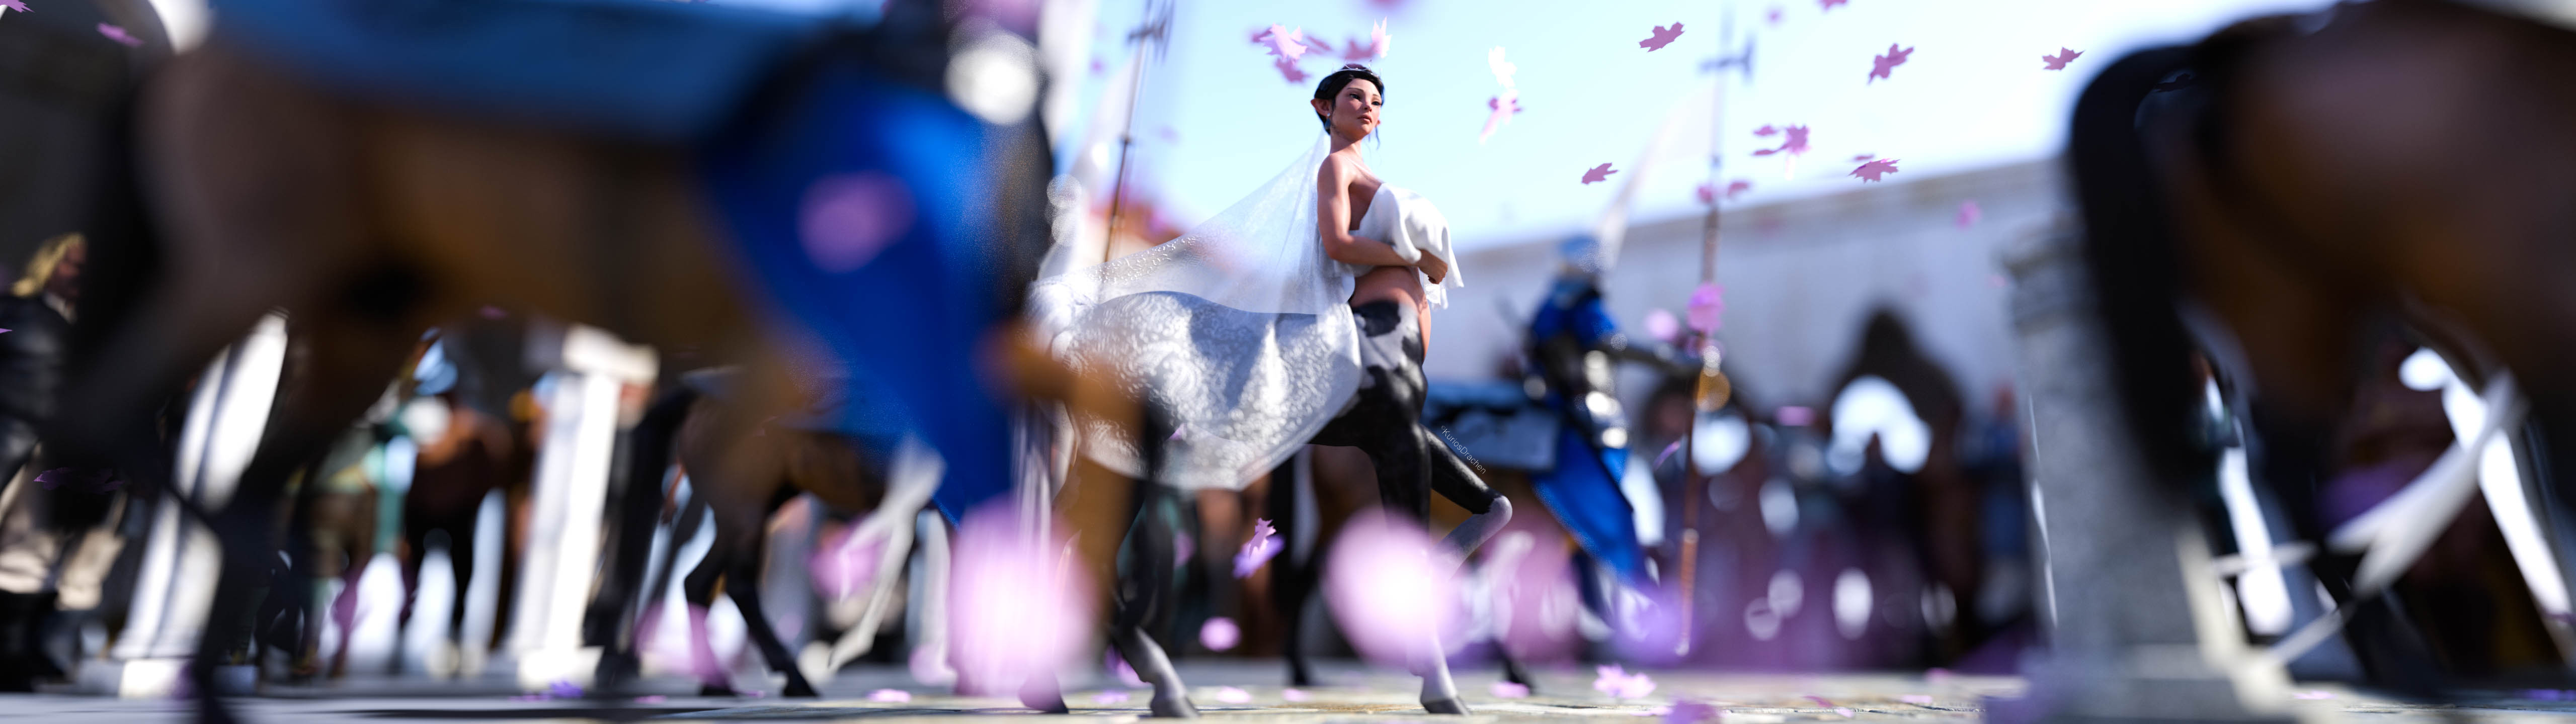 General 5120x1440 CGI Centaurs ultrawide KuriosDrachen depth of field horse girls blurred blurry background digital art